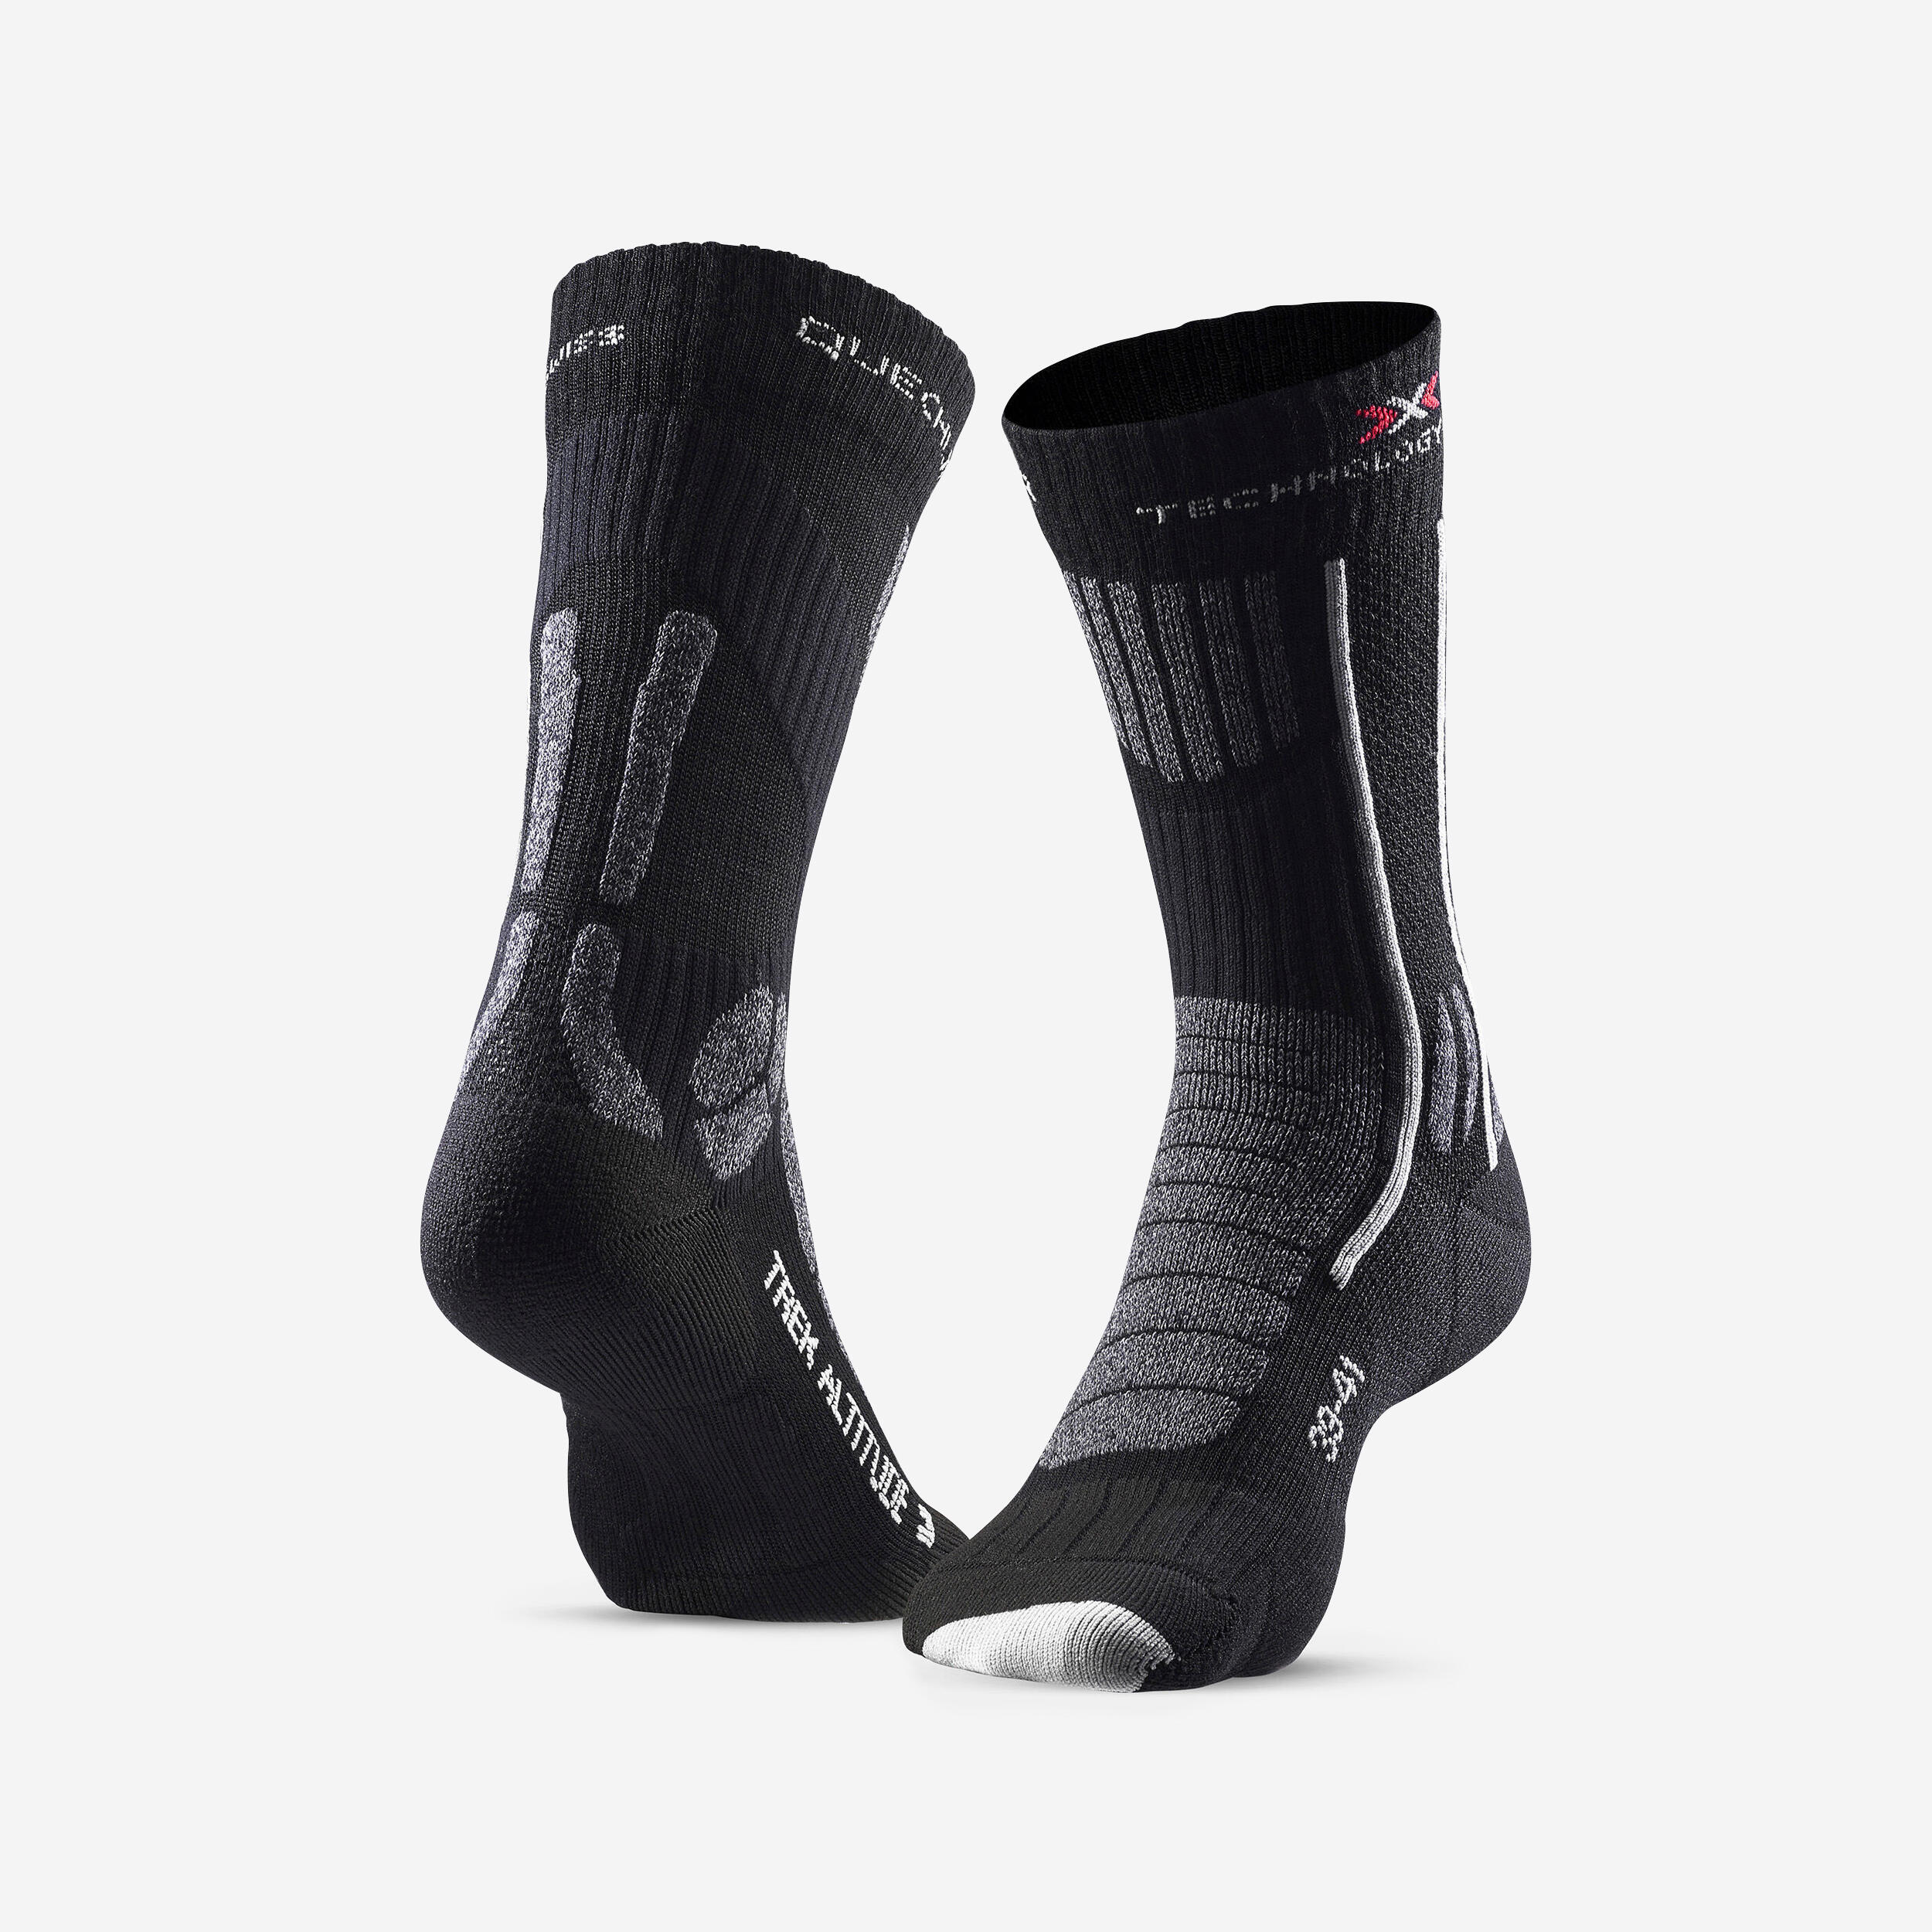 Trek Altitude Socks (pack of 1 pair) - Black 1/8